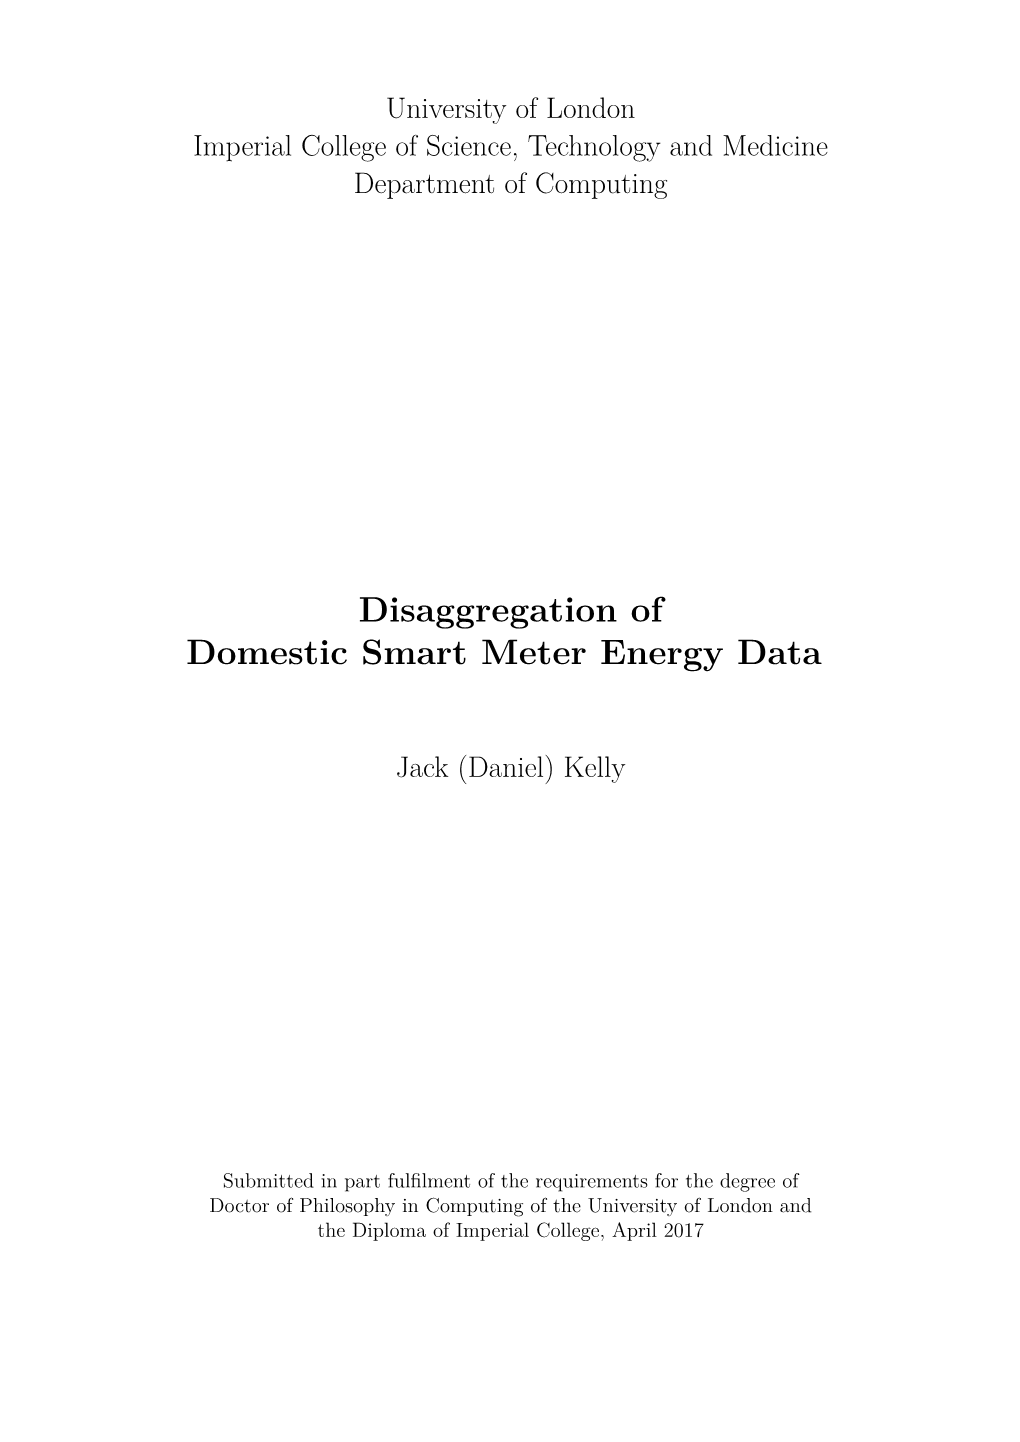 Disaggregation of Domestic Smart Meter Energy Data